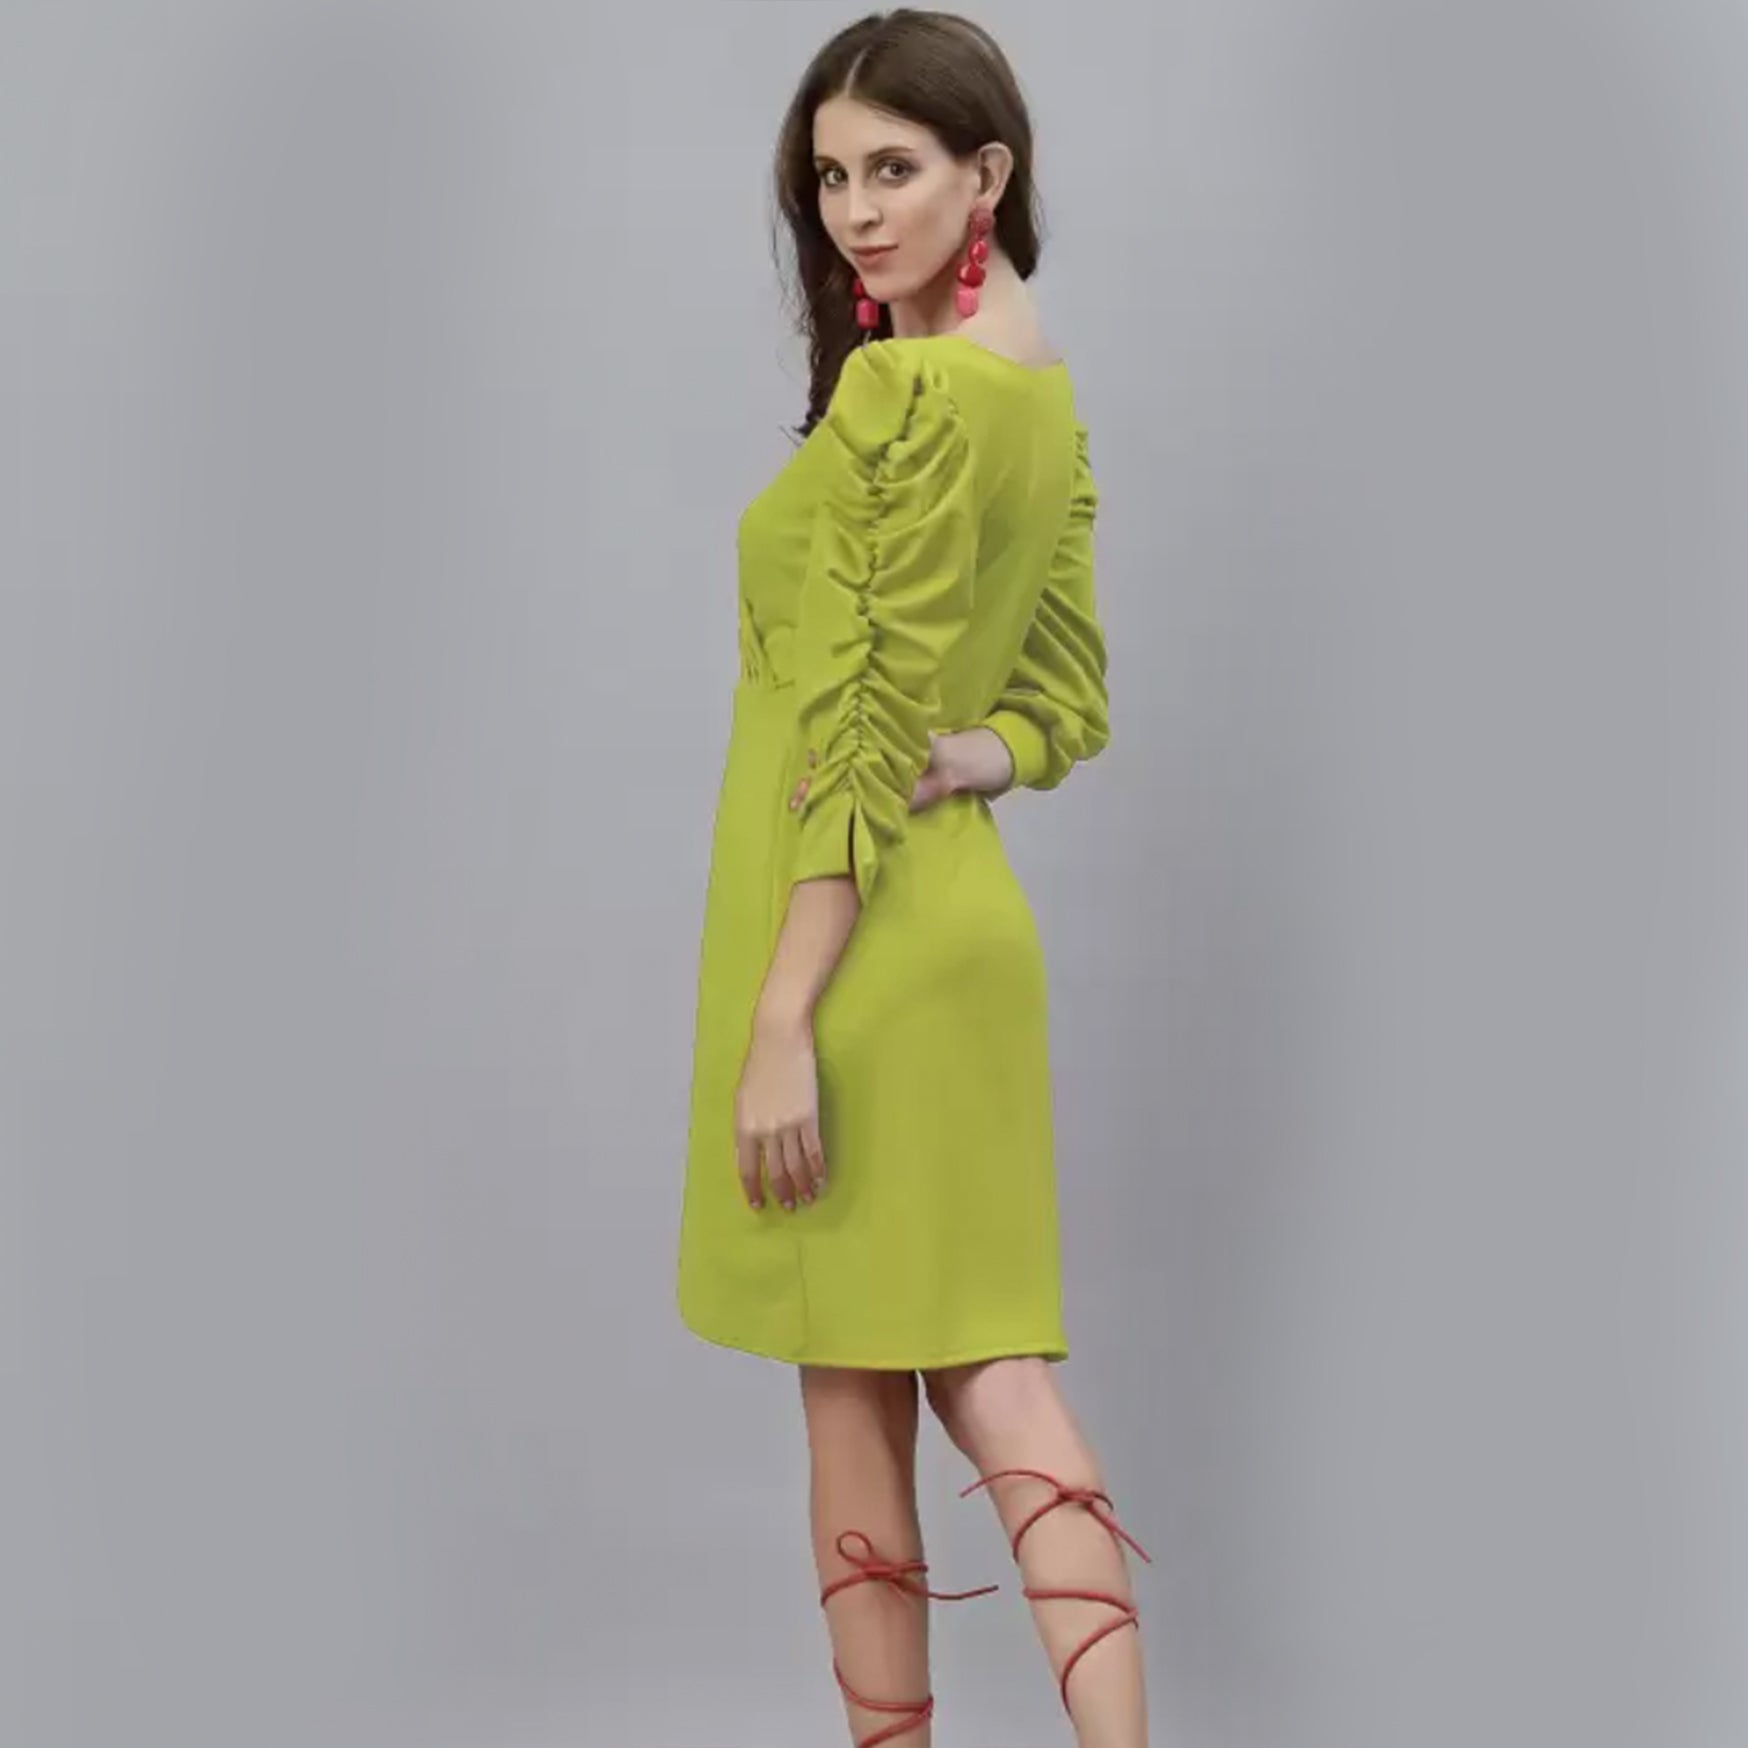 Selvia Women Bodycon Green Dress